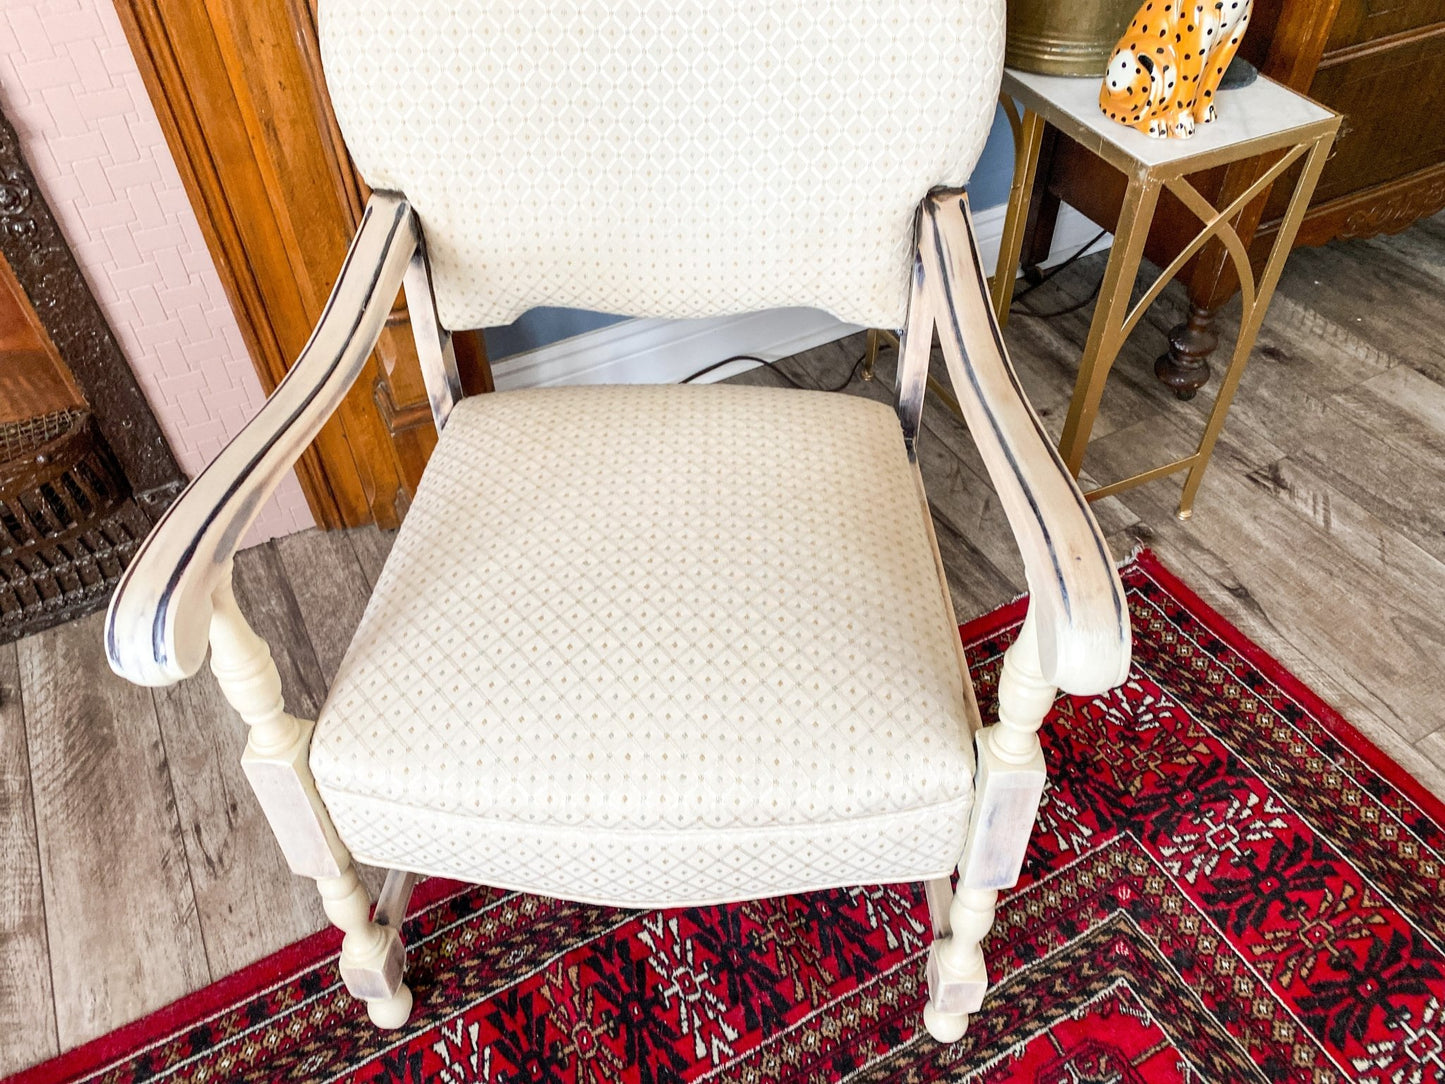 Queen Anne Shabby Chic Chair - Perth Market